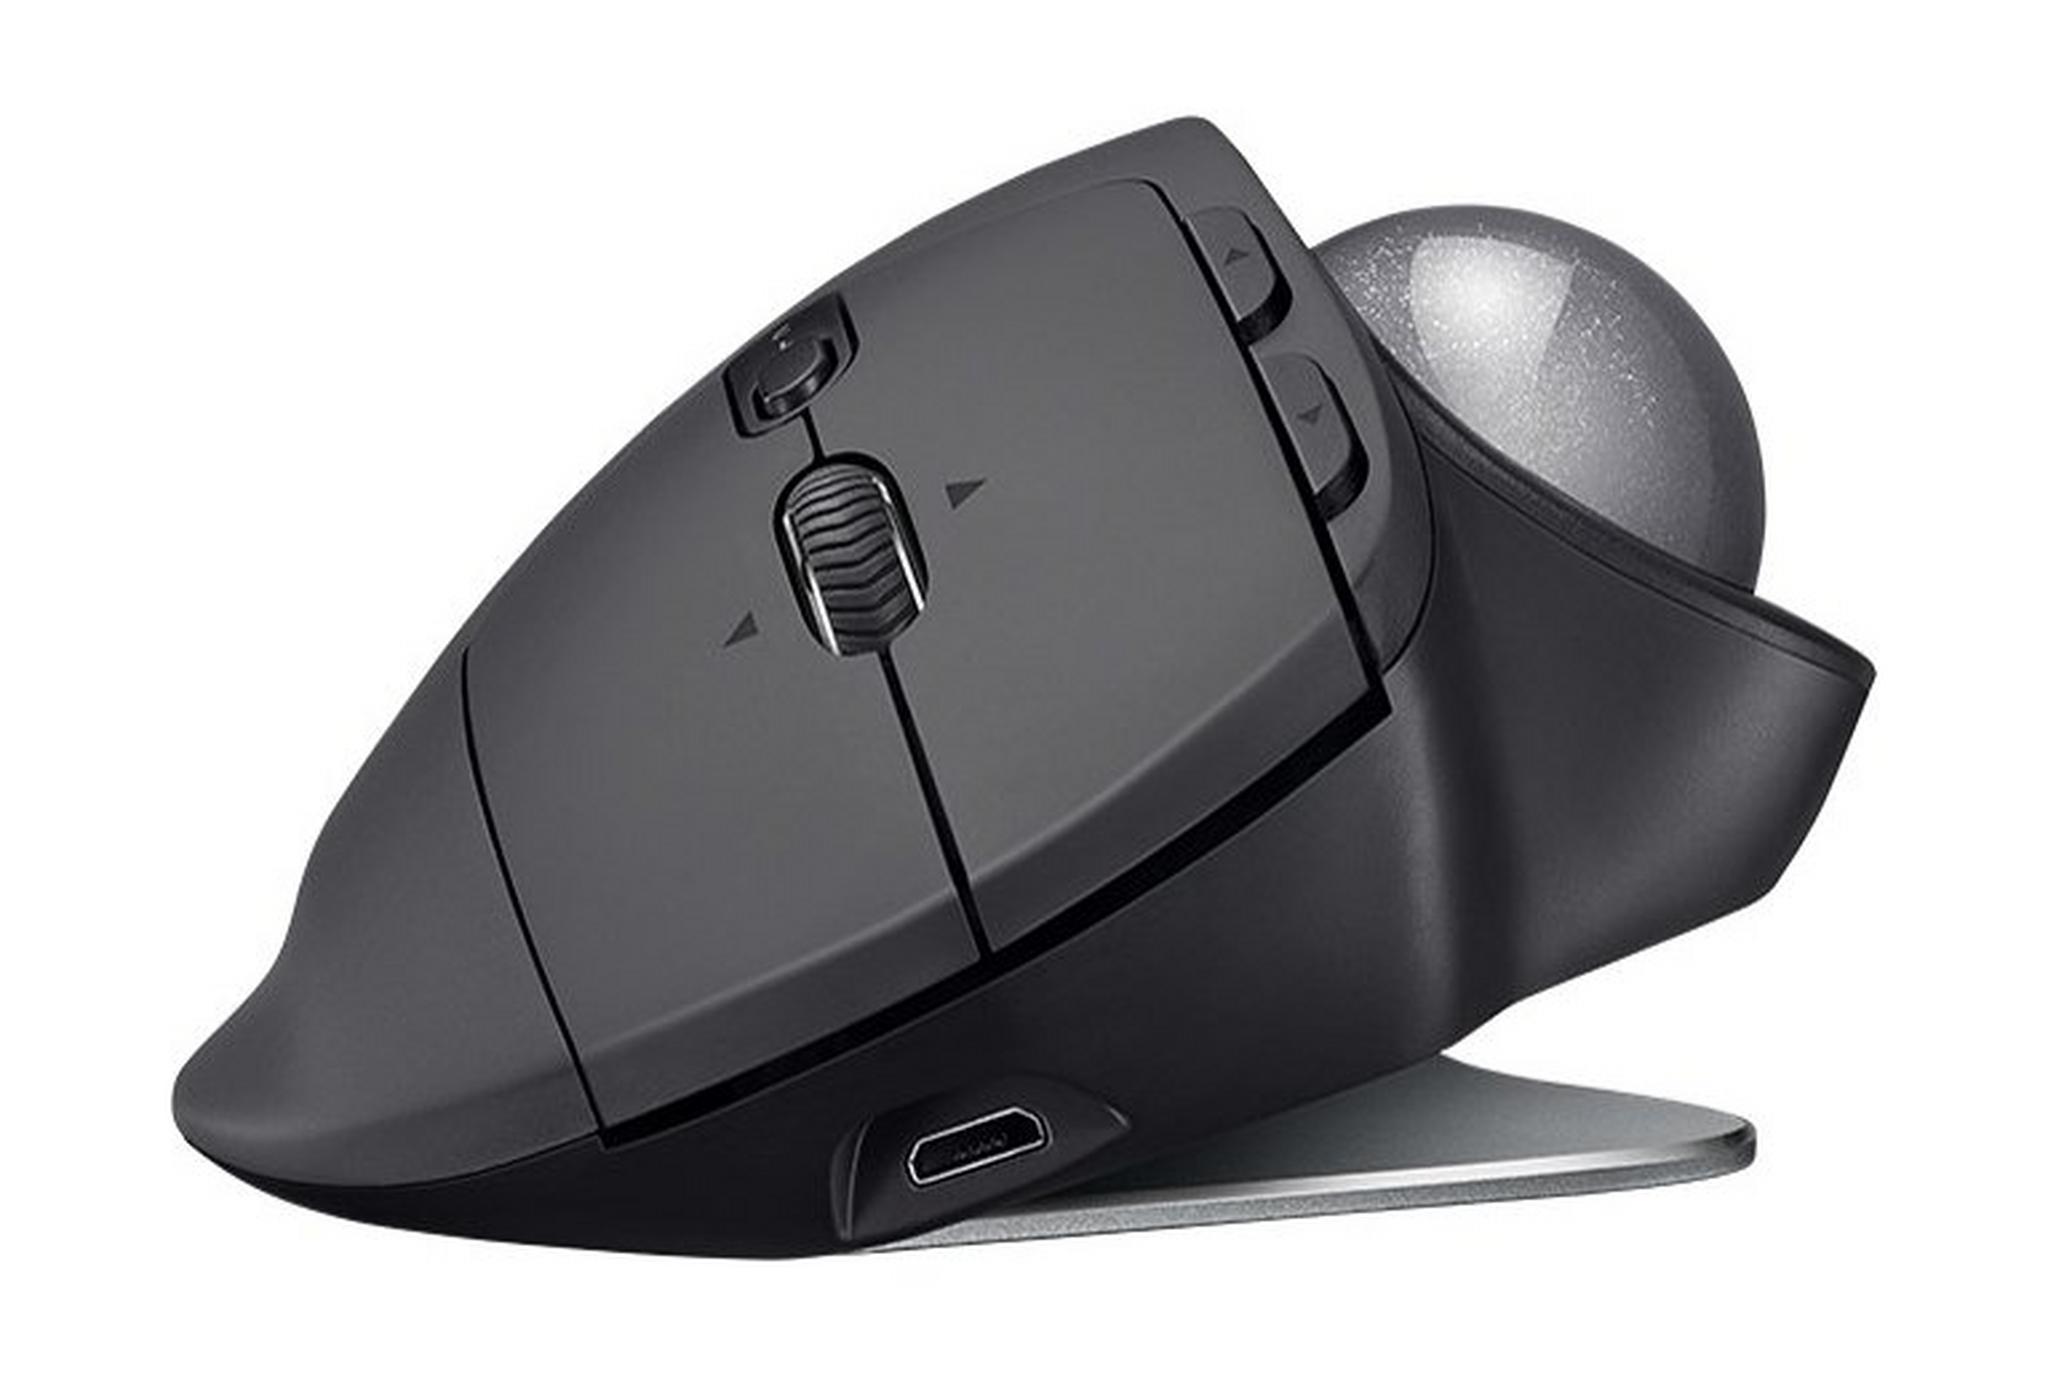 Logitech MX ERGO Wireless Mouse (910-005179) - Graphite